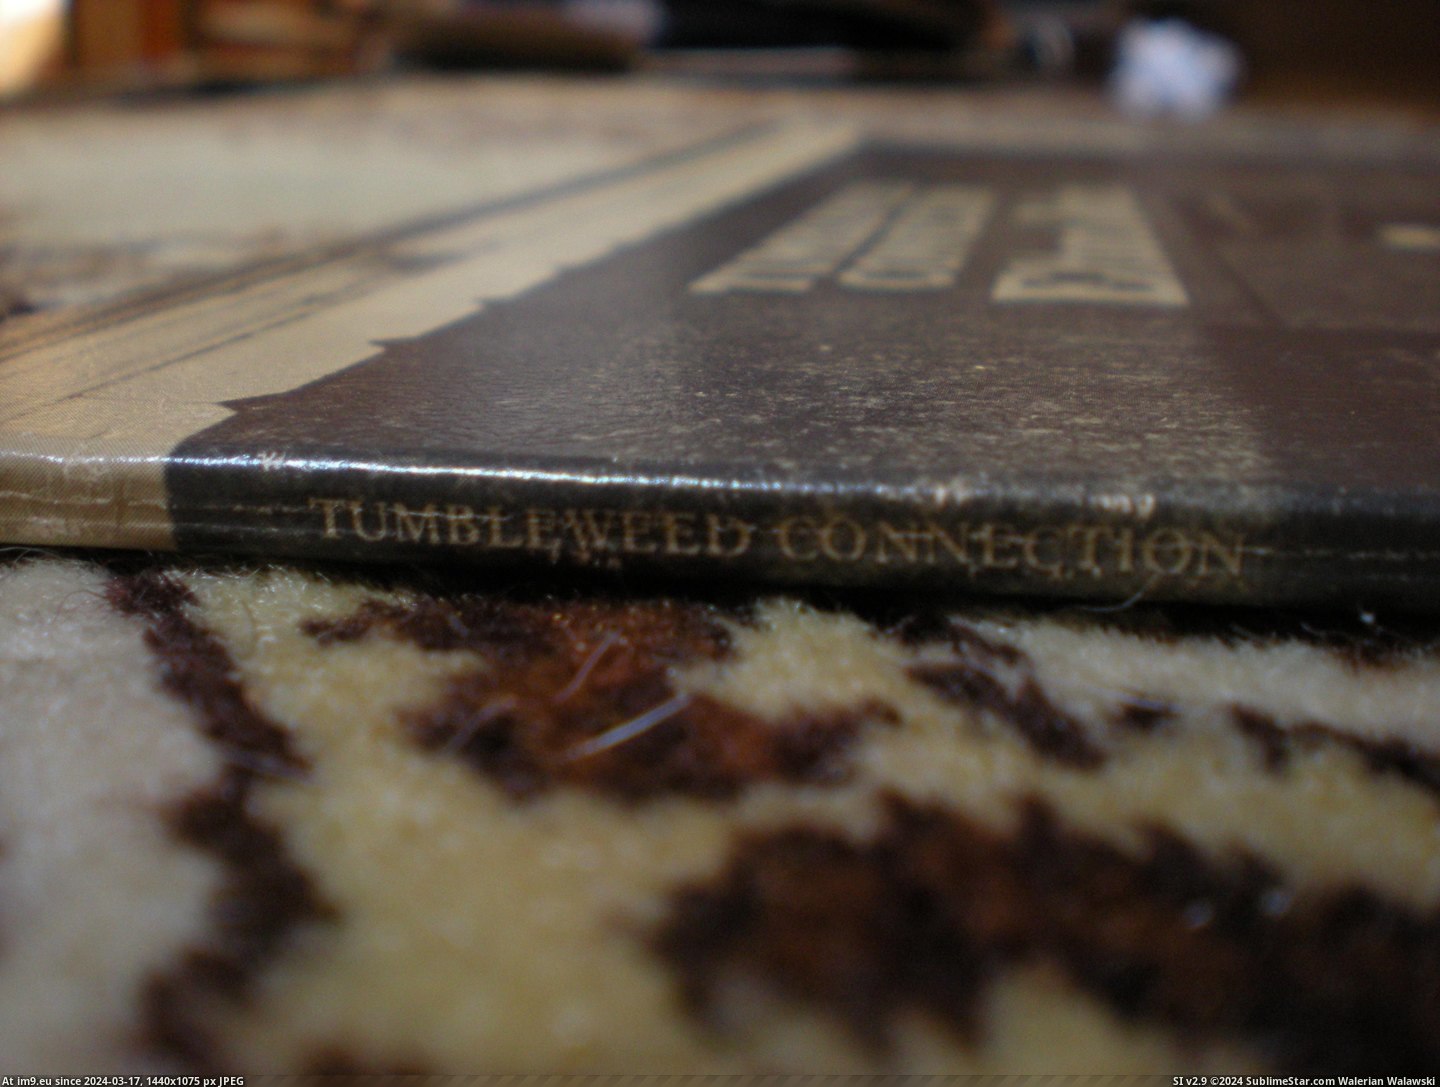  #Tumbleweed  Tumbleweed 9 Pic. (Bild von album new 1))